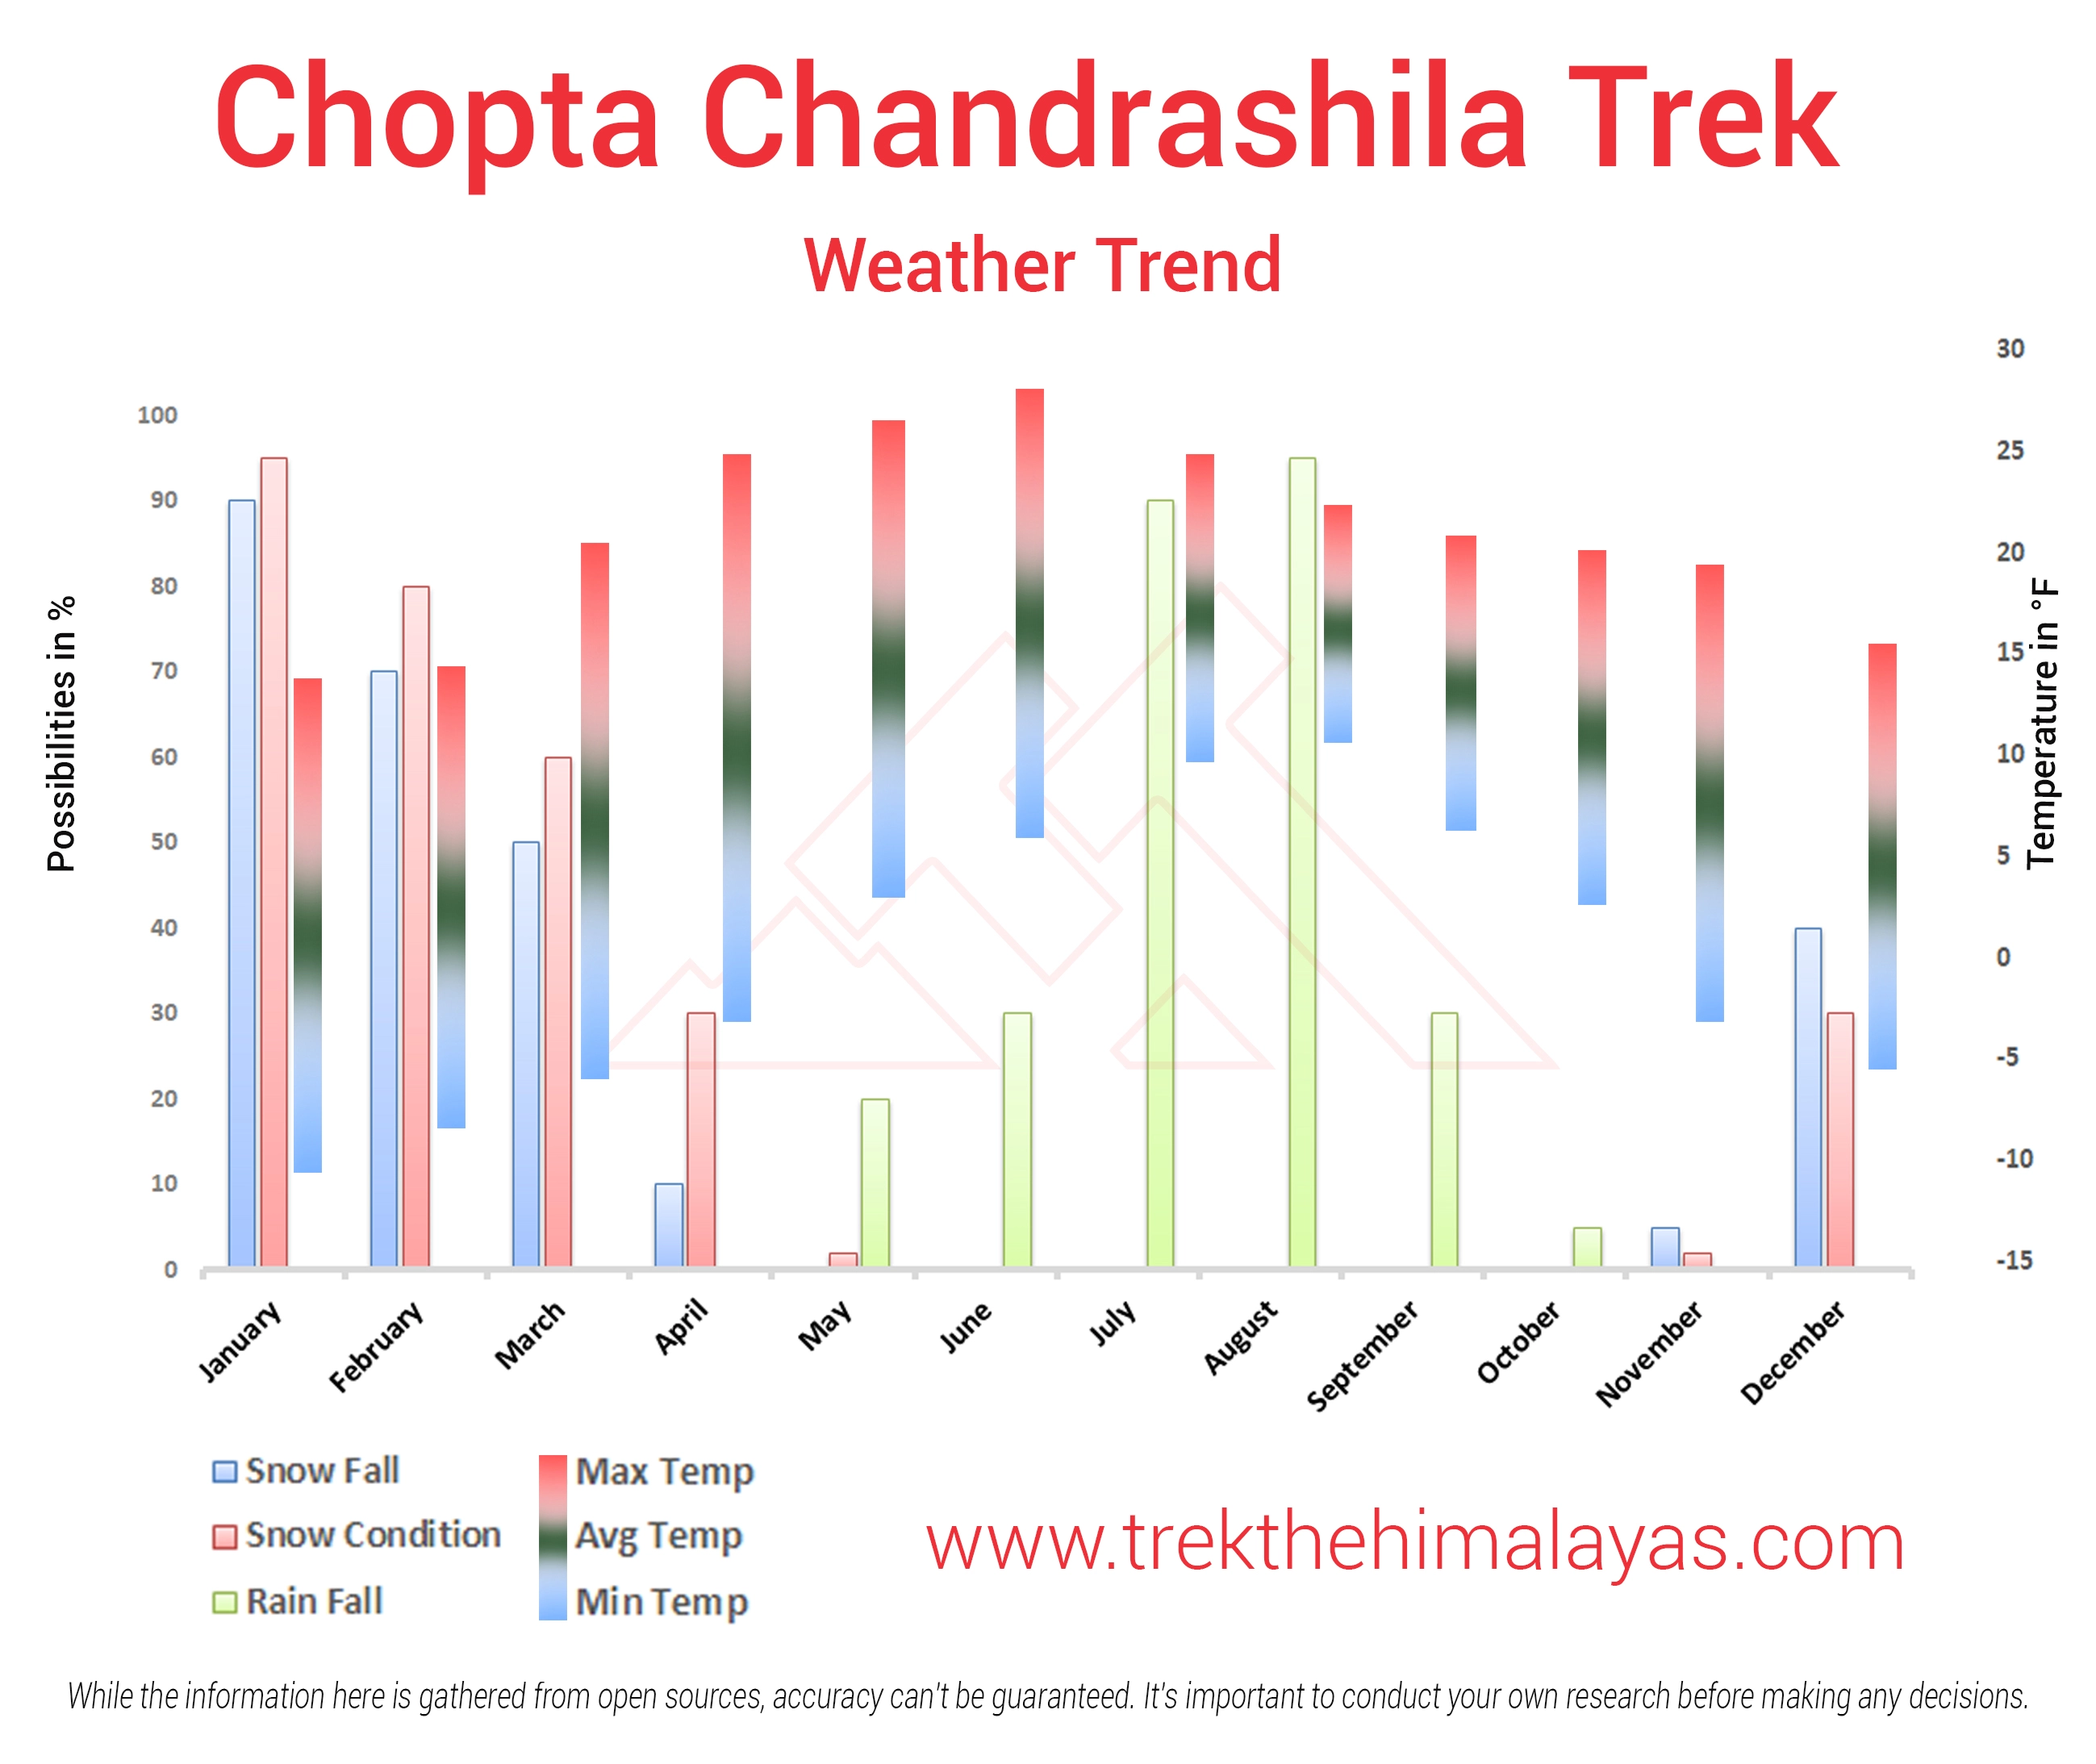 Chopta Chandrashila Tungnath Trek with Deorital Maps